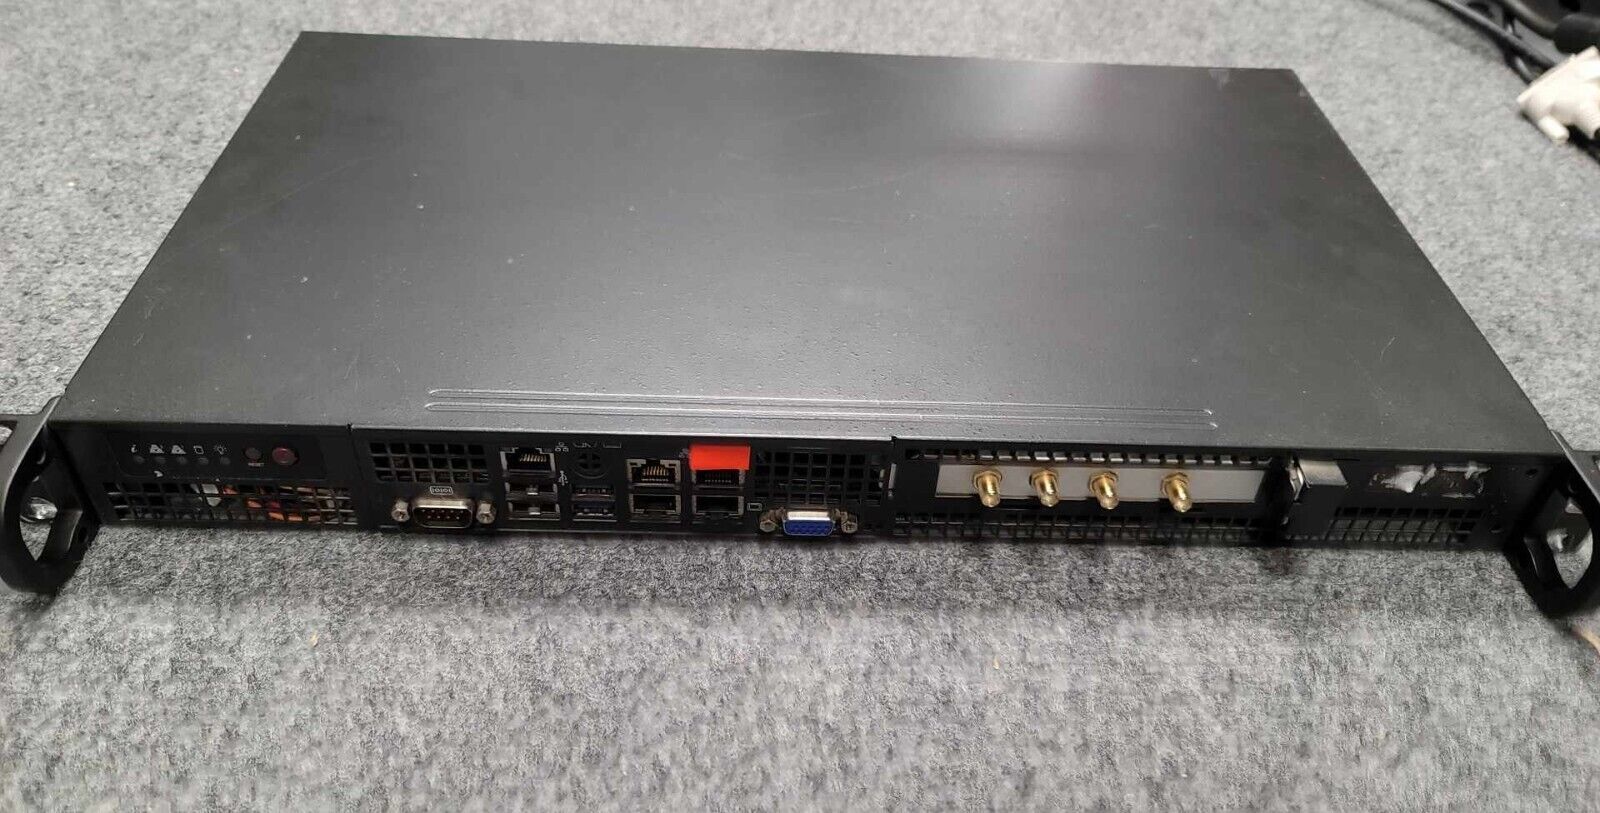 Supermicro 5018A-FTN4 Rack Server - Black